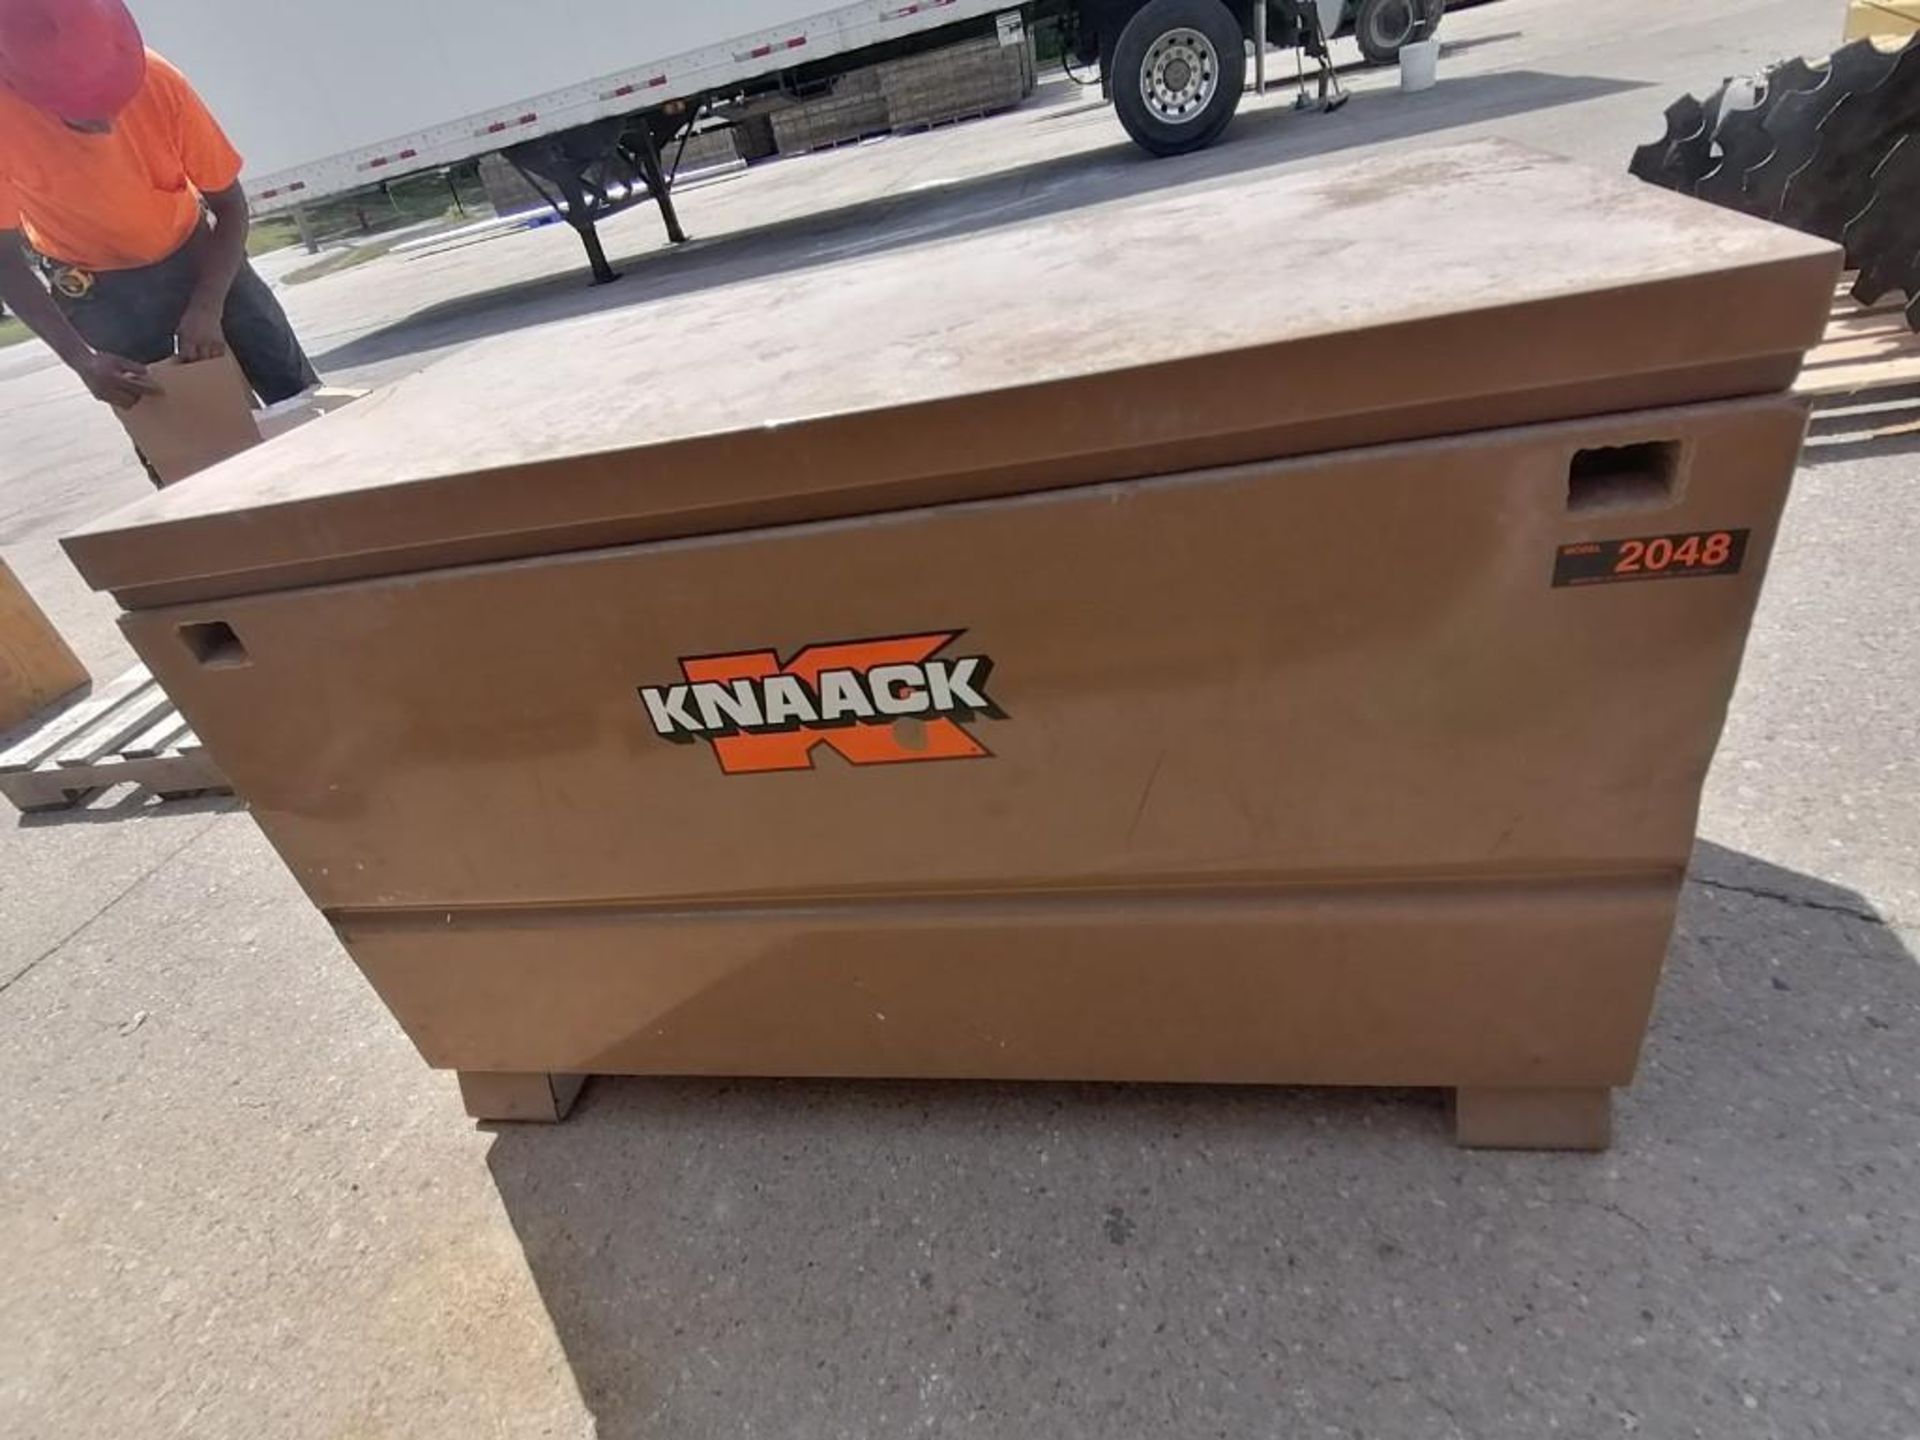 (1) KNAACK Tool Box Model 2048. Located at 301 E Henry Street, Mt. Pleasant, IA 52641.